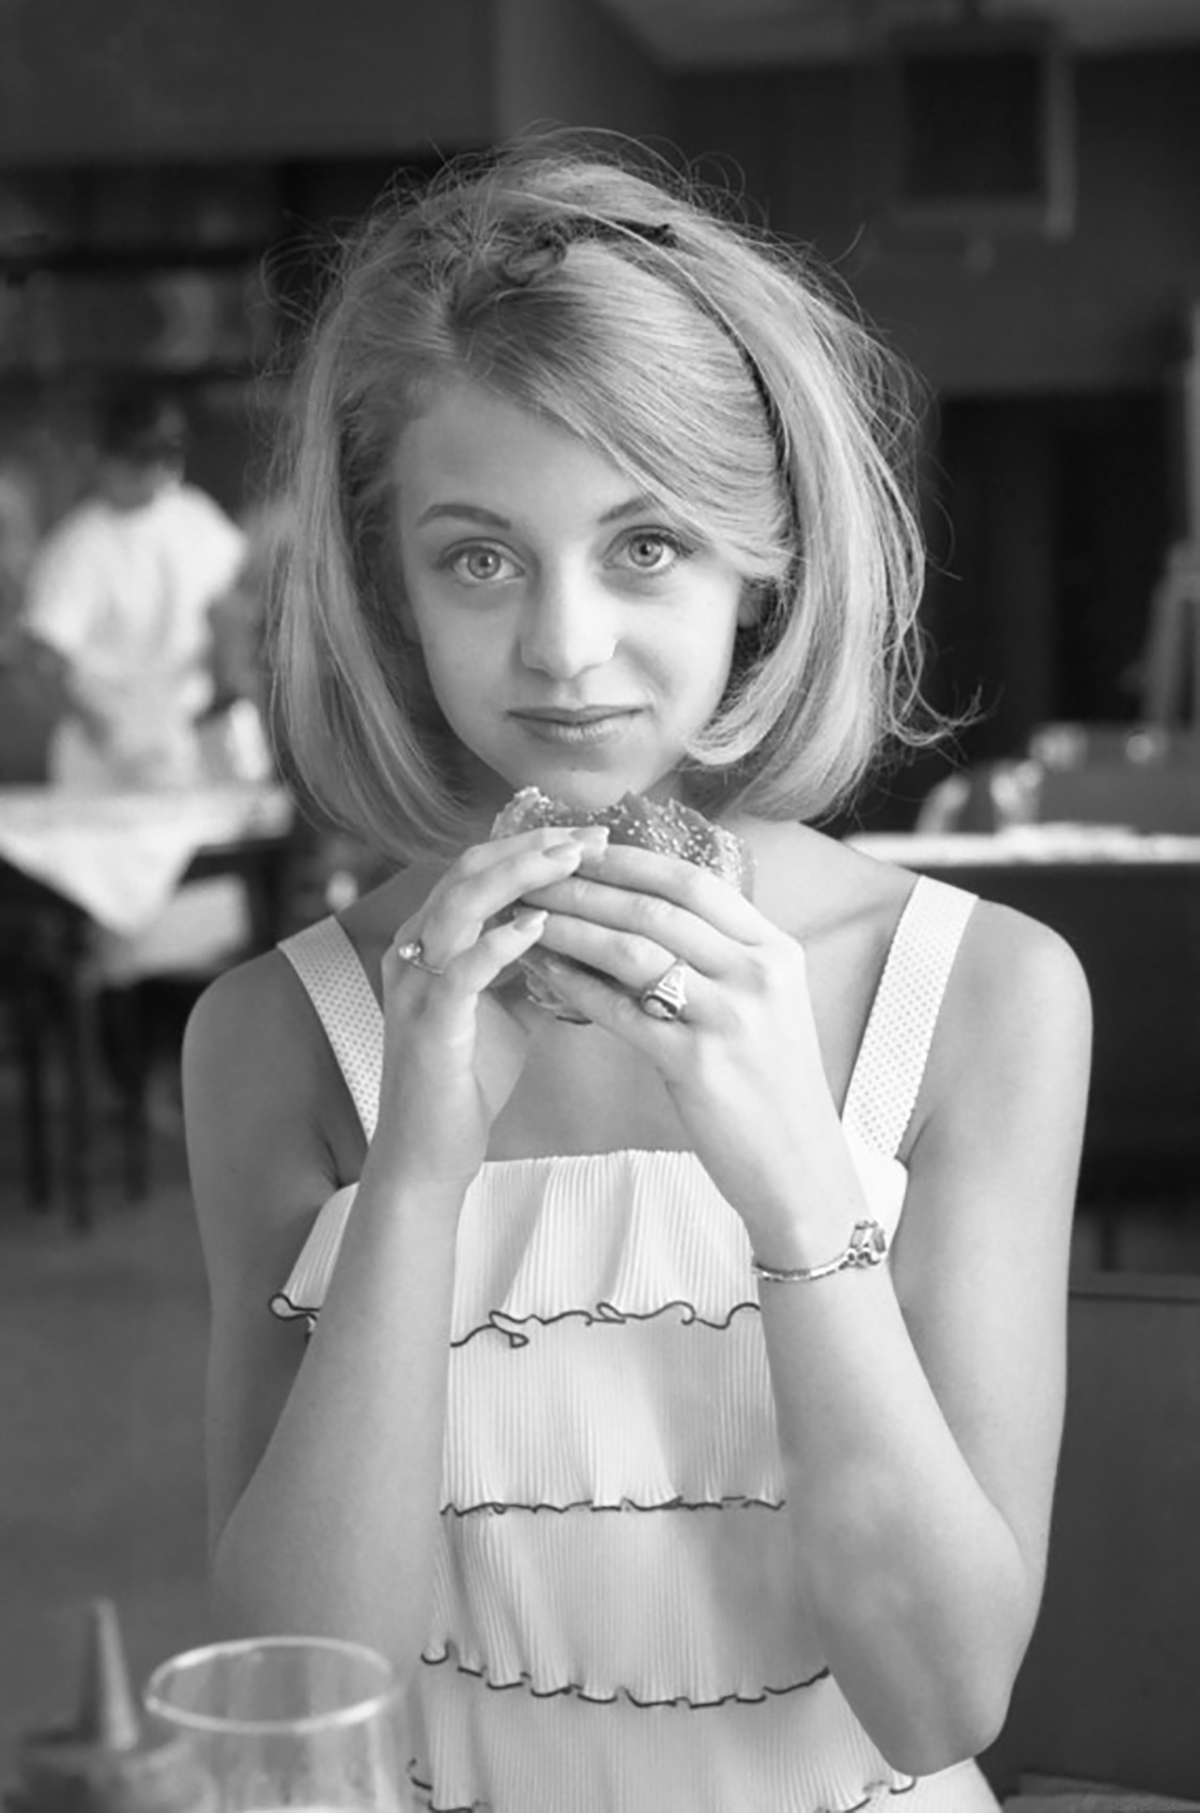 Goldie Hawn eating a sandwich, 1964.